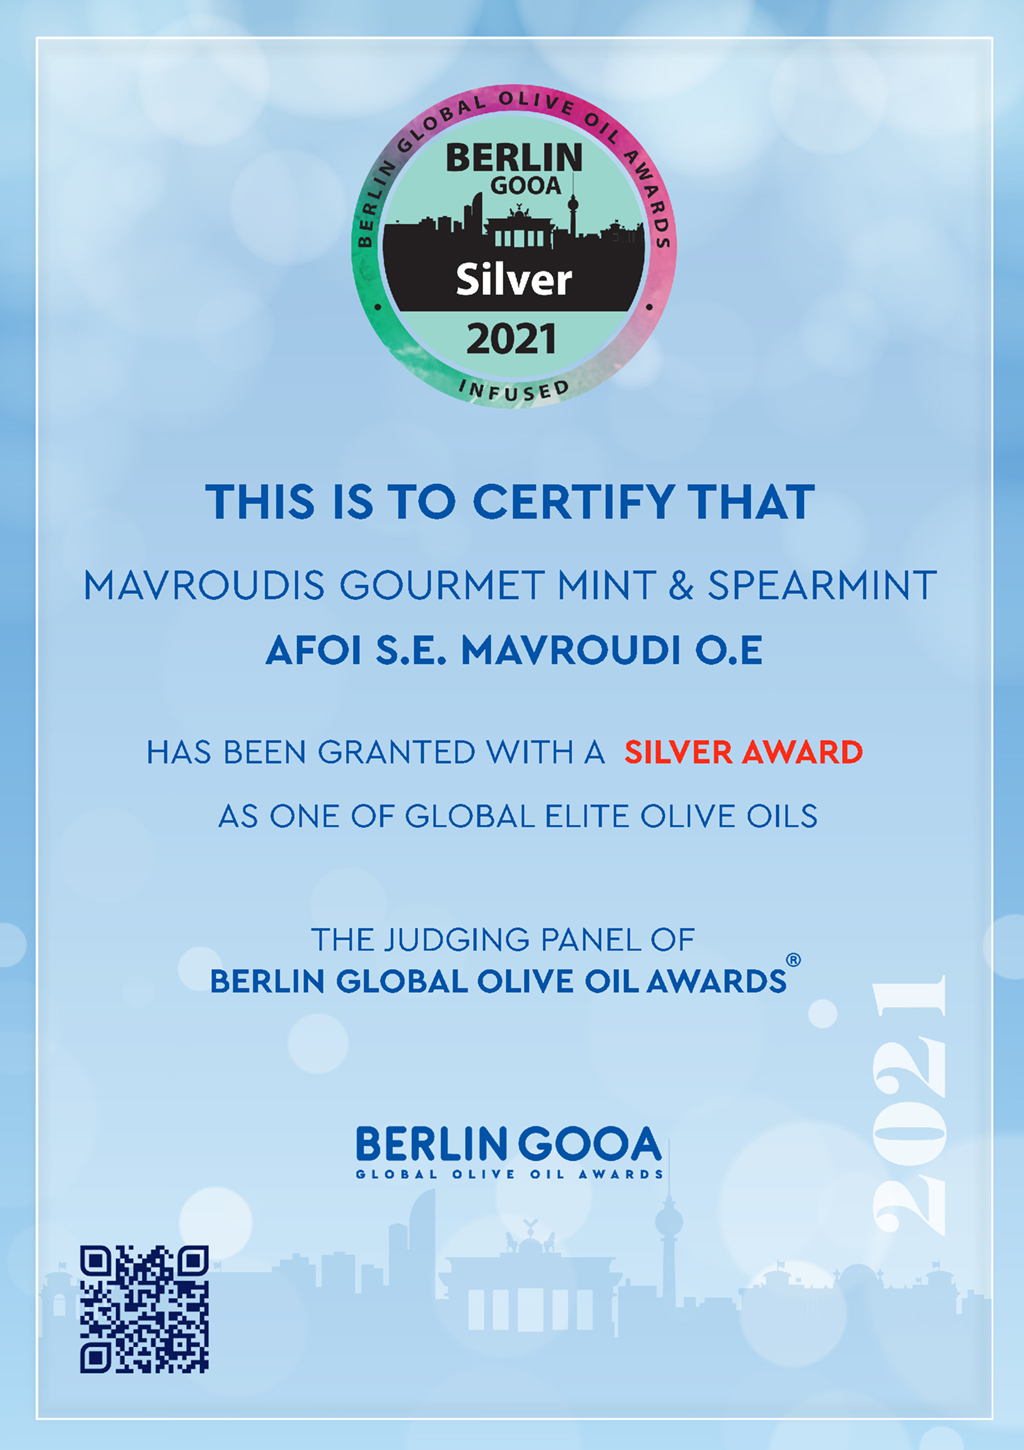 GOURMET MINT OLIVE OIL Award